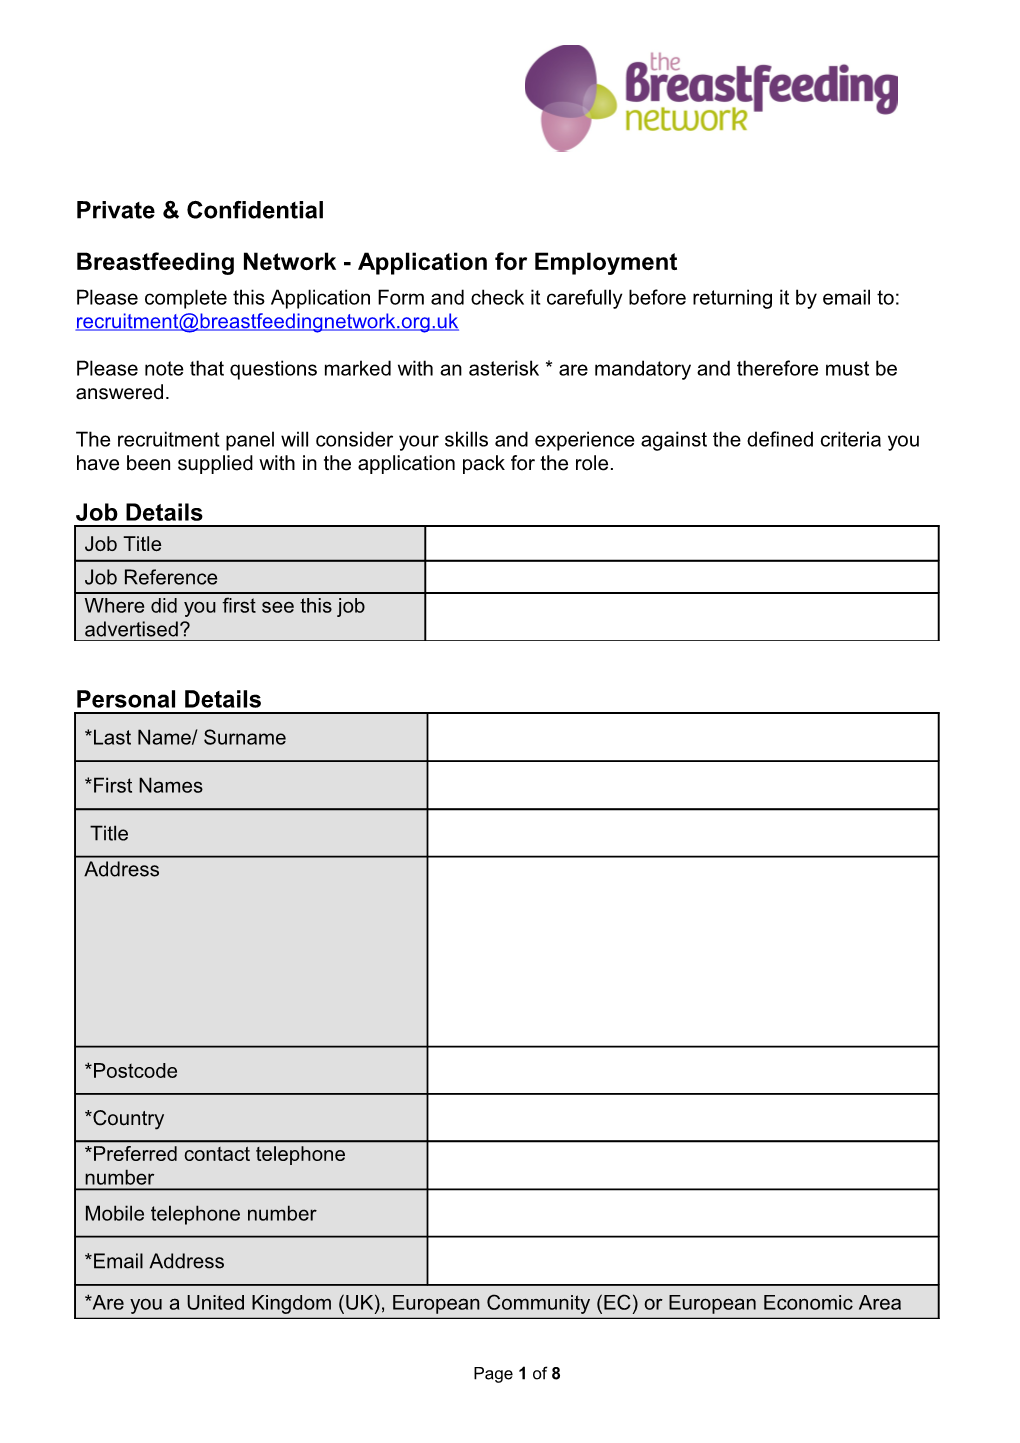 Breastfeeding Network - Application for Employment